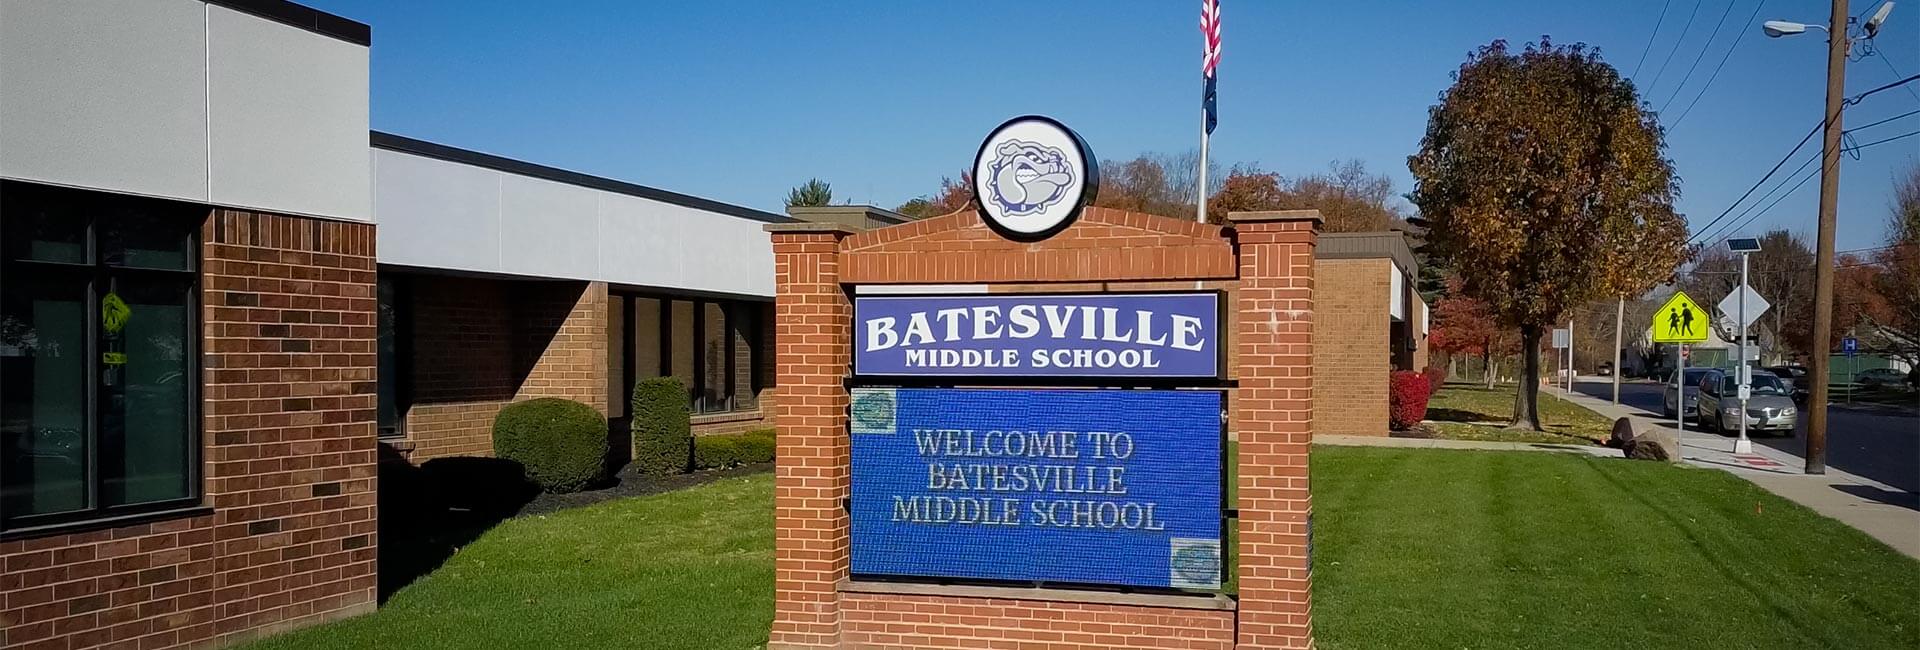 Vista exterior de la escuela secundaria Batesville